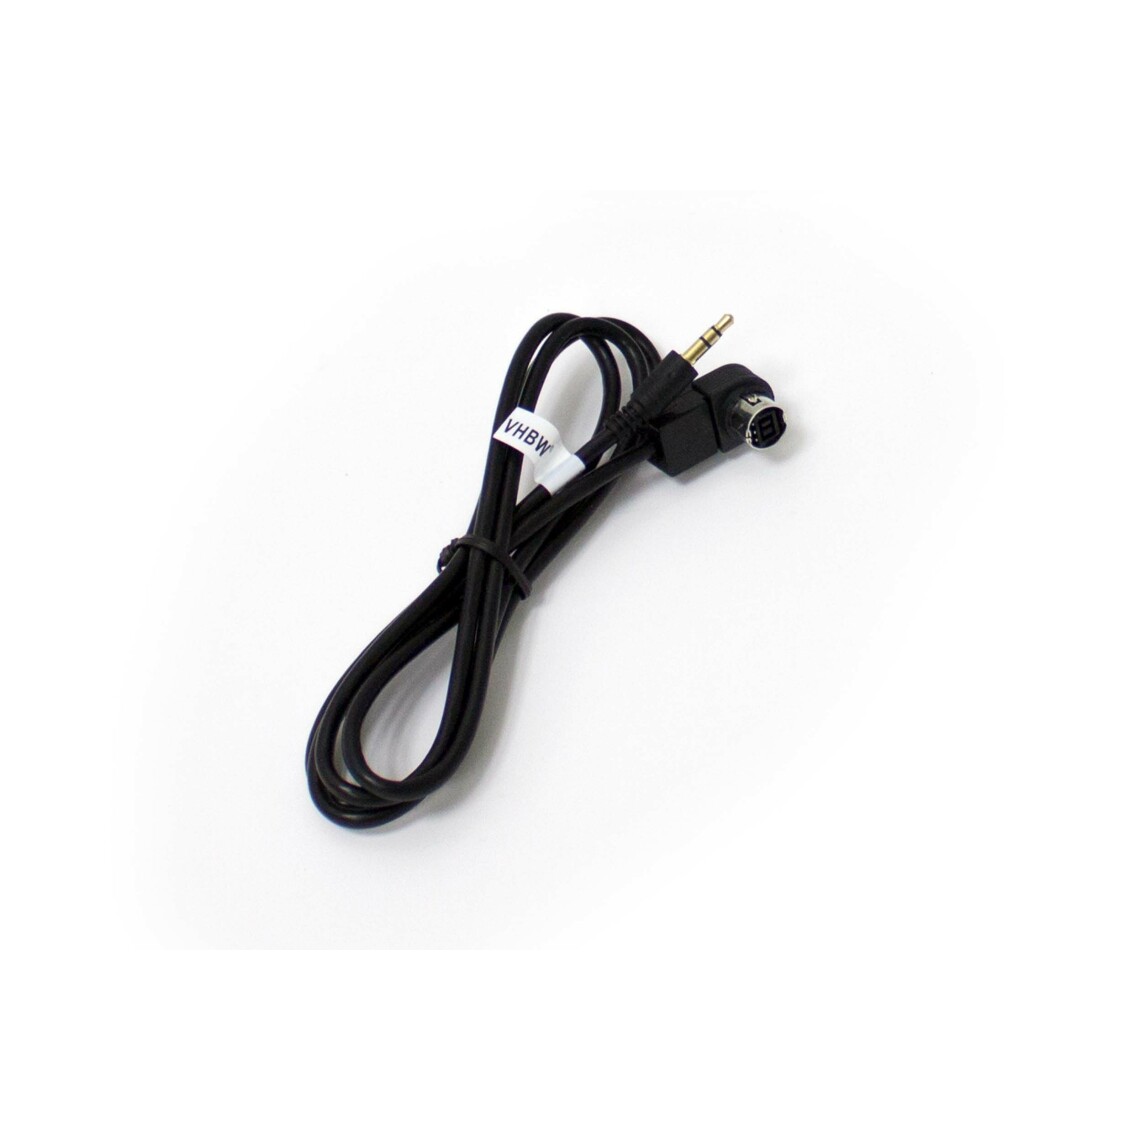 Vhbw - vhbw Câble adaptateur de ligne AUX Radio compatible avec Alpine CDA-9884R, CDA-9885R, CDA-9886R, CDA-9887R, DVA-7996R, DVA-9860R voiture, véhicule - Alimentation modulaire